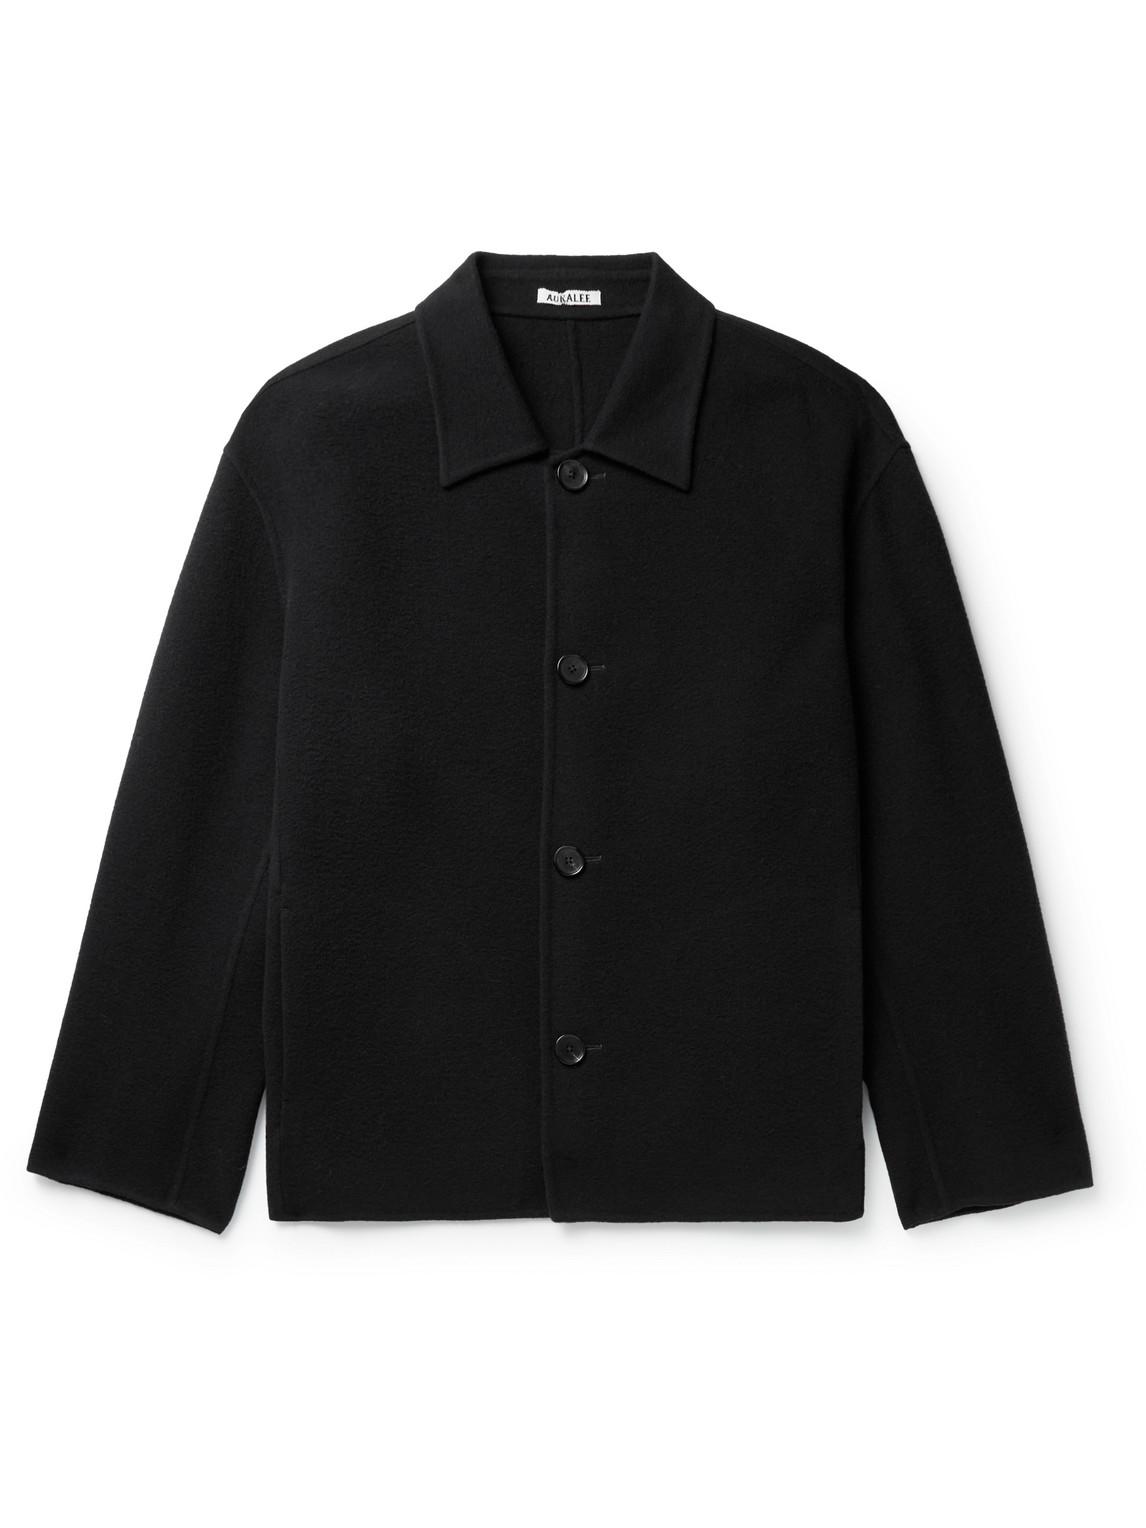 AURALEE Brushed-wool Jacket in Black for Men | Lyst